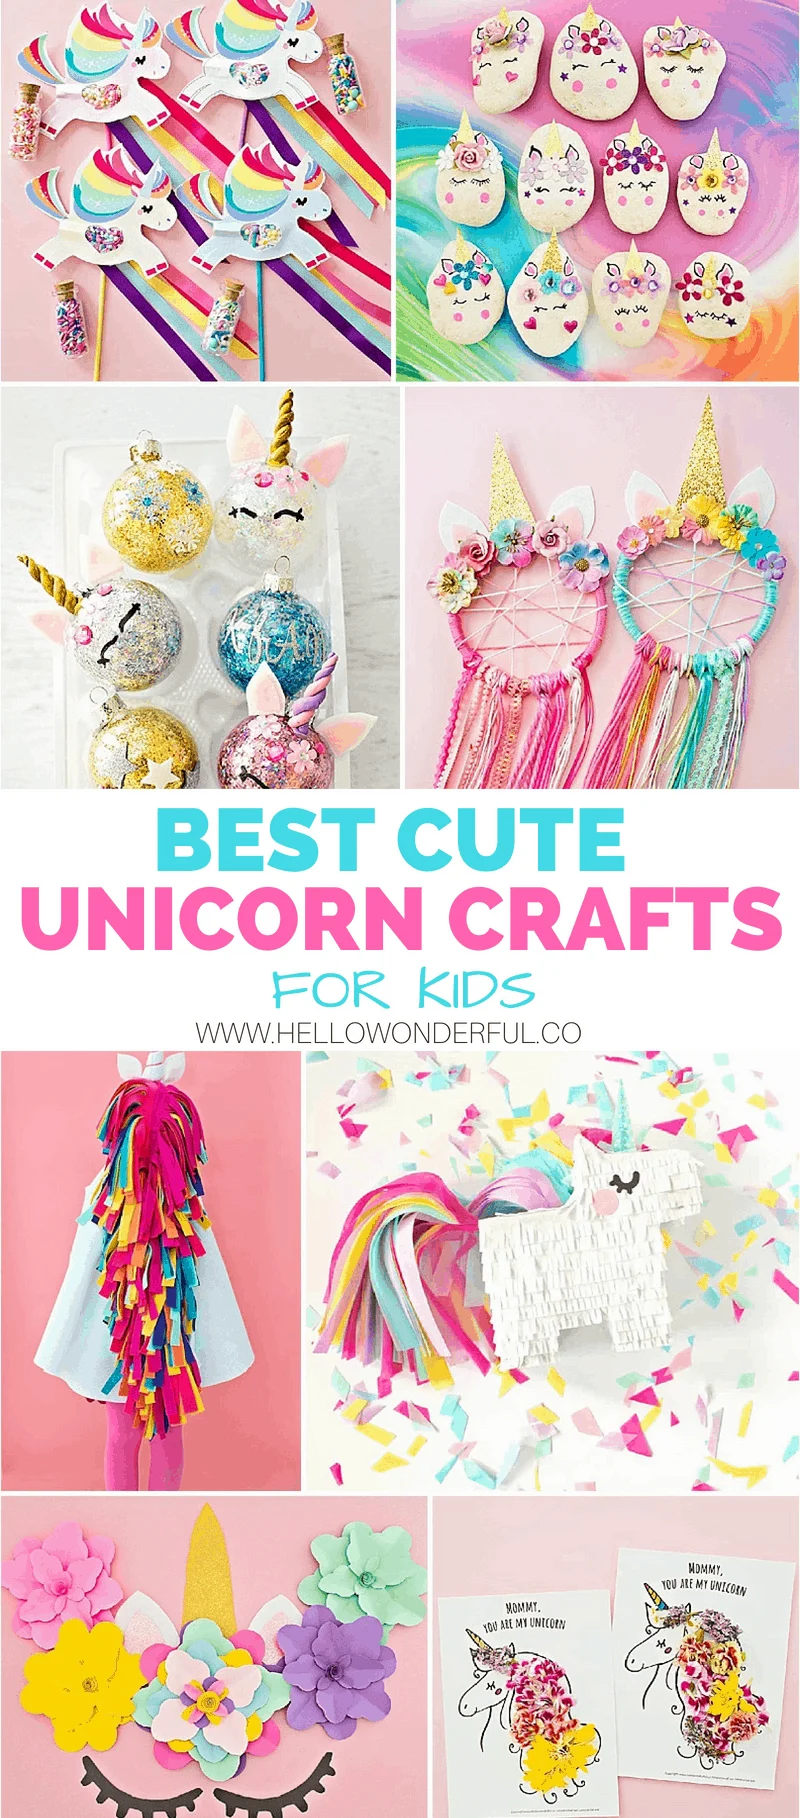 Unicorn Crafts - Free Templates - Party with Unicorns